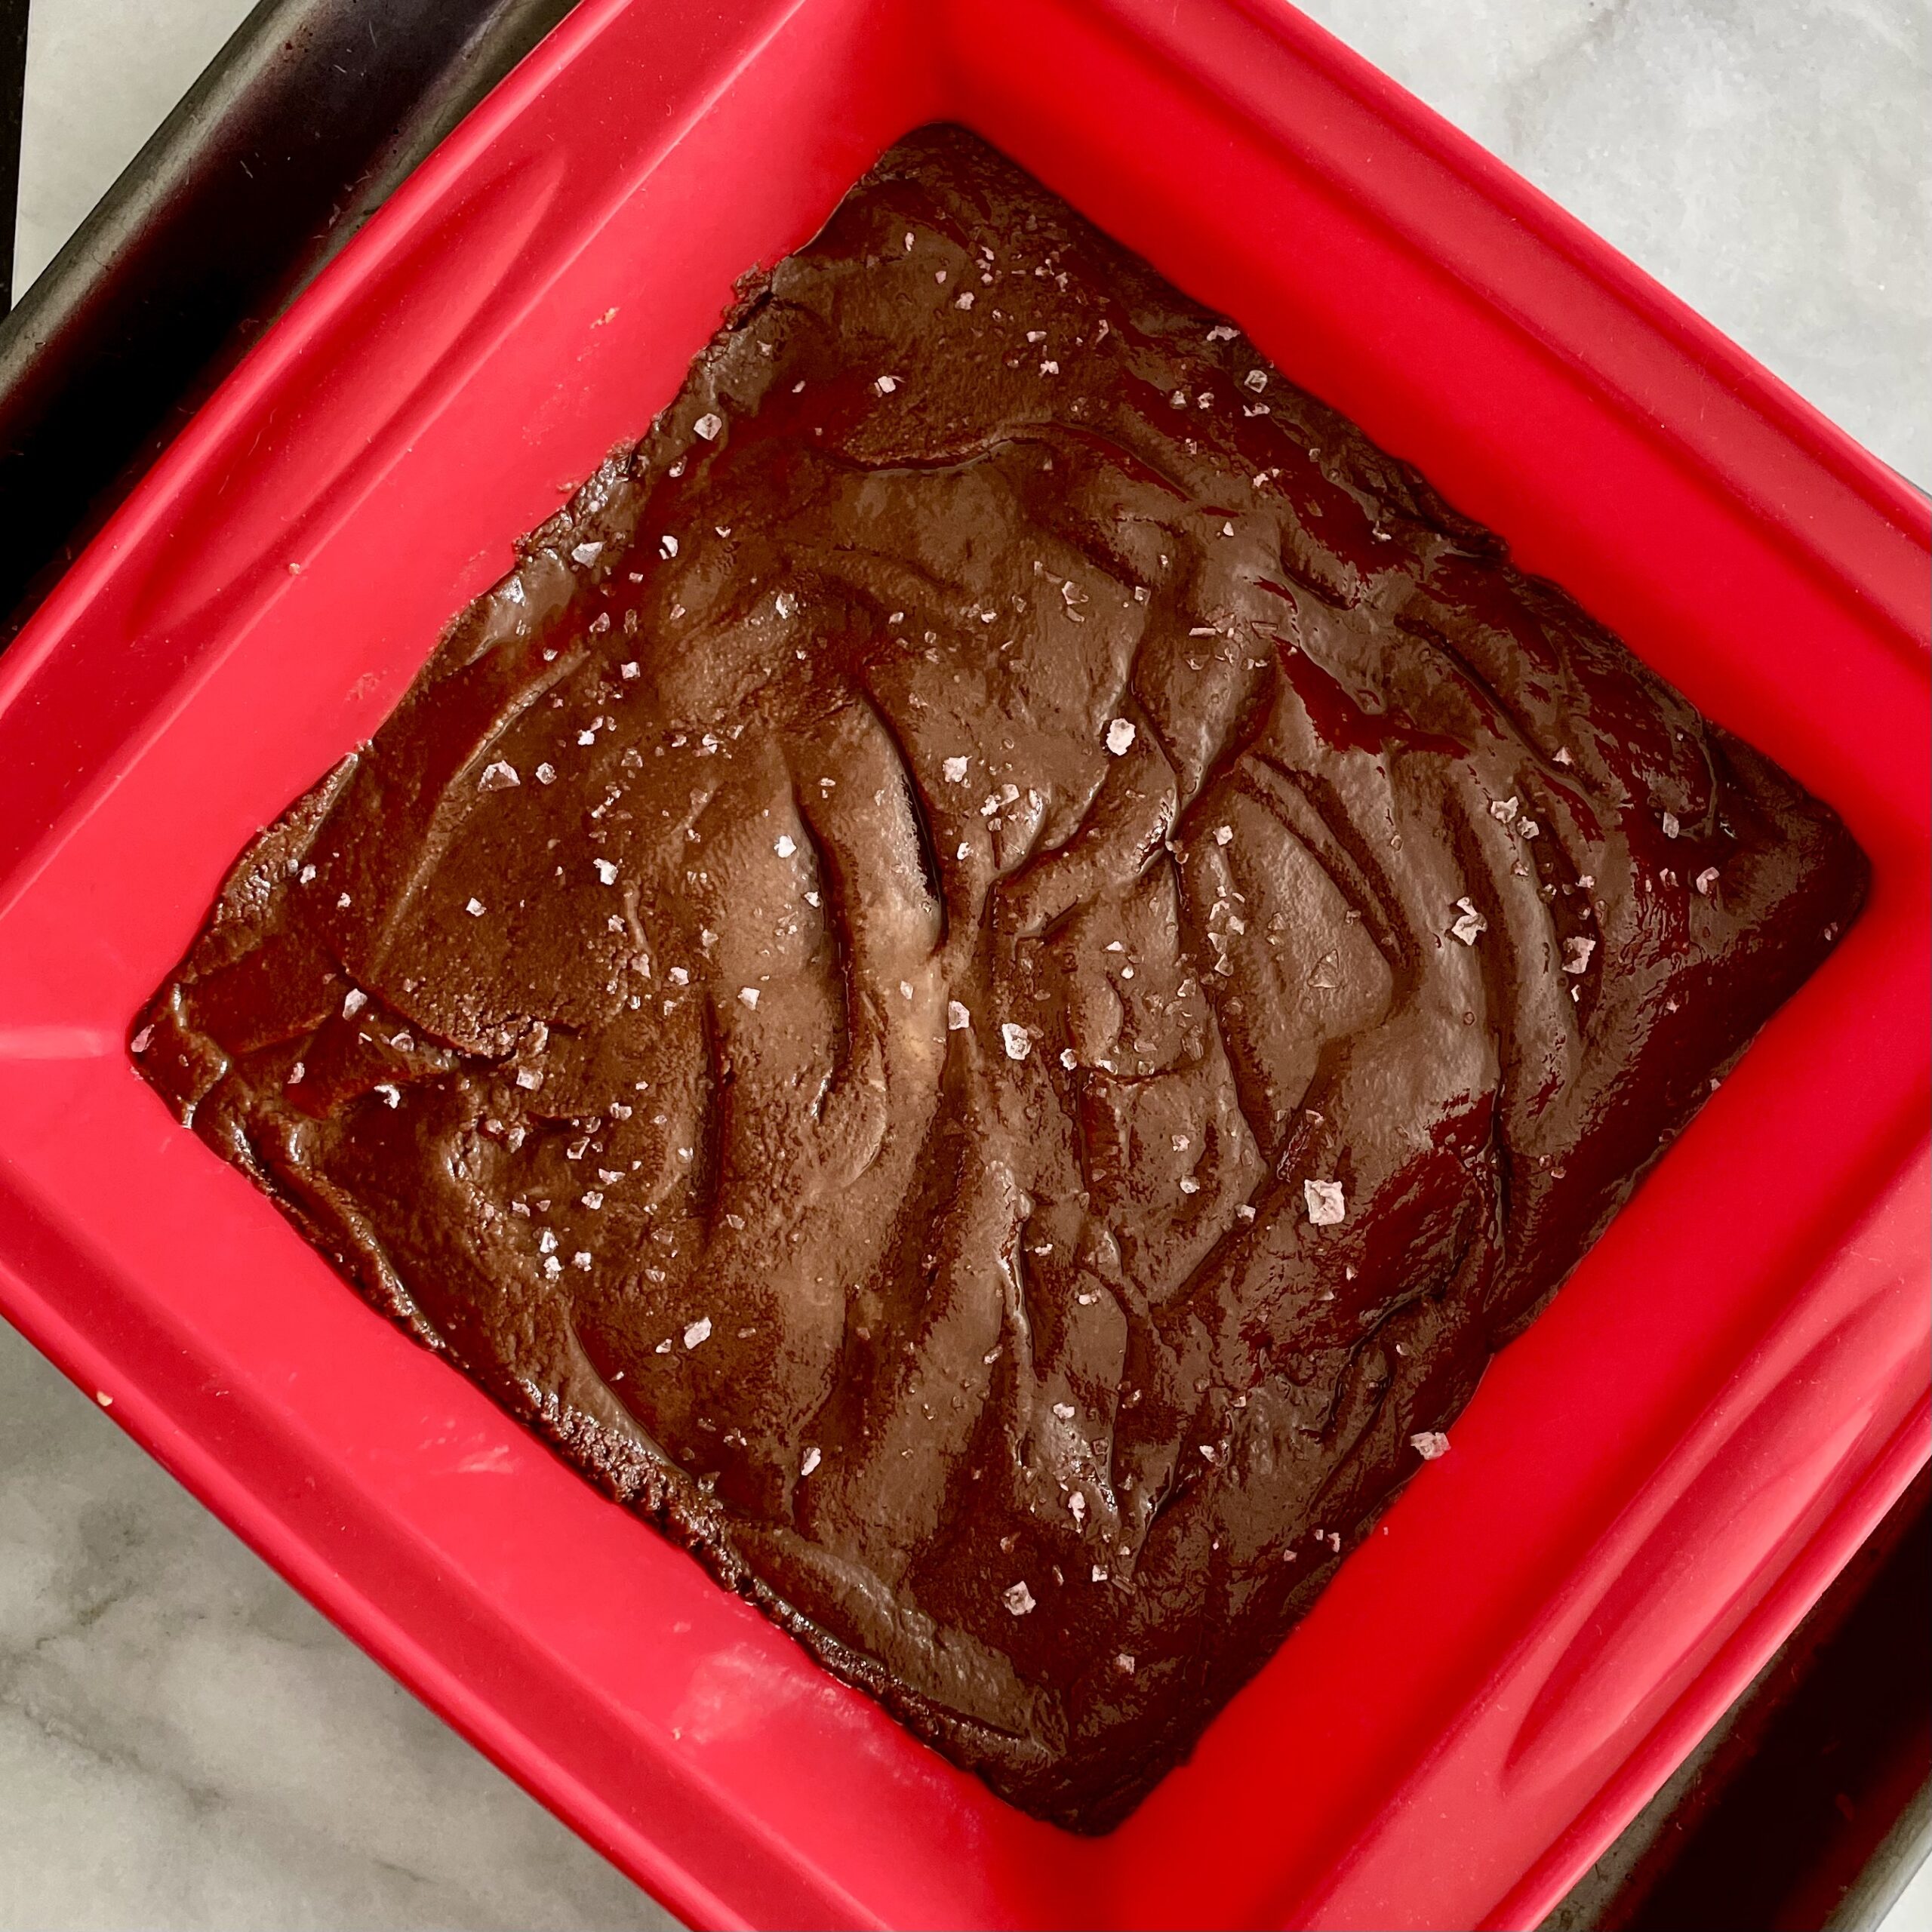 chocolate tahini fudge with sea salt spread into an 8-inch red silicone baking pan